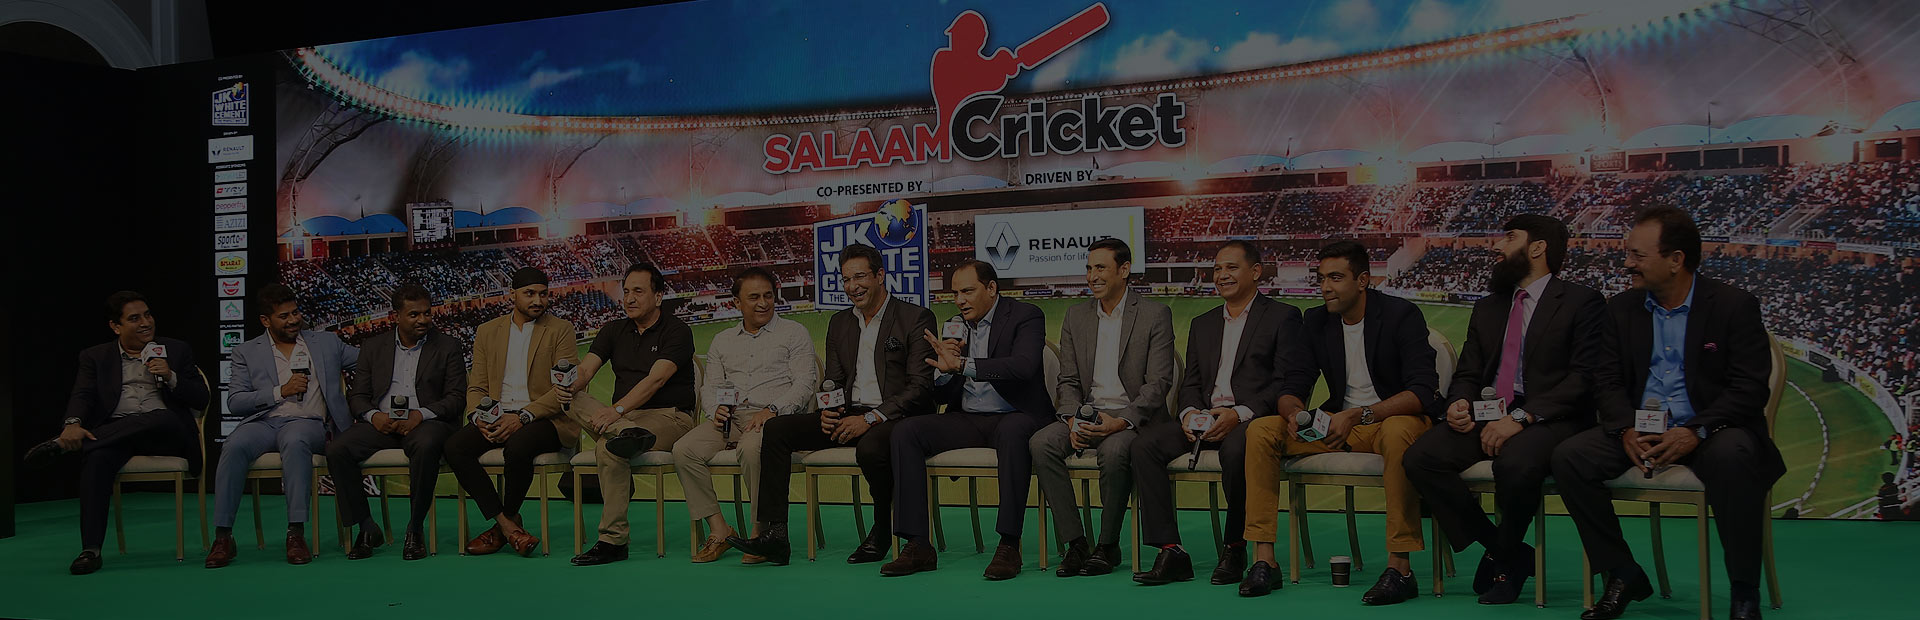 Salaam Cricket 2018 Dubai